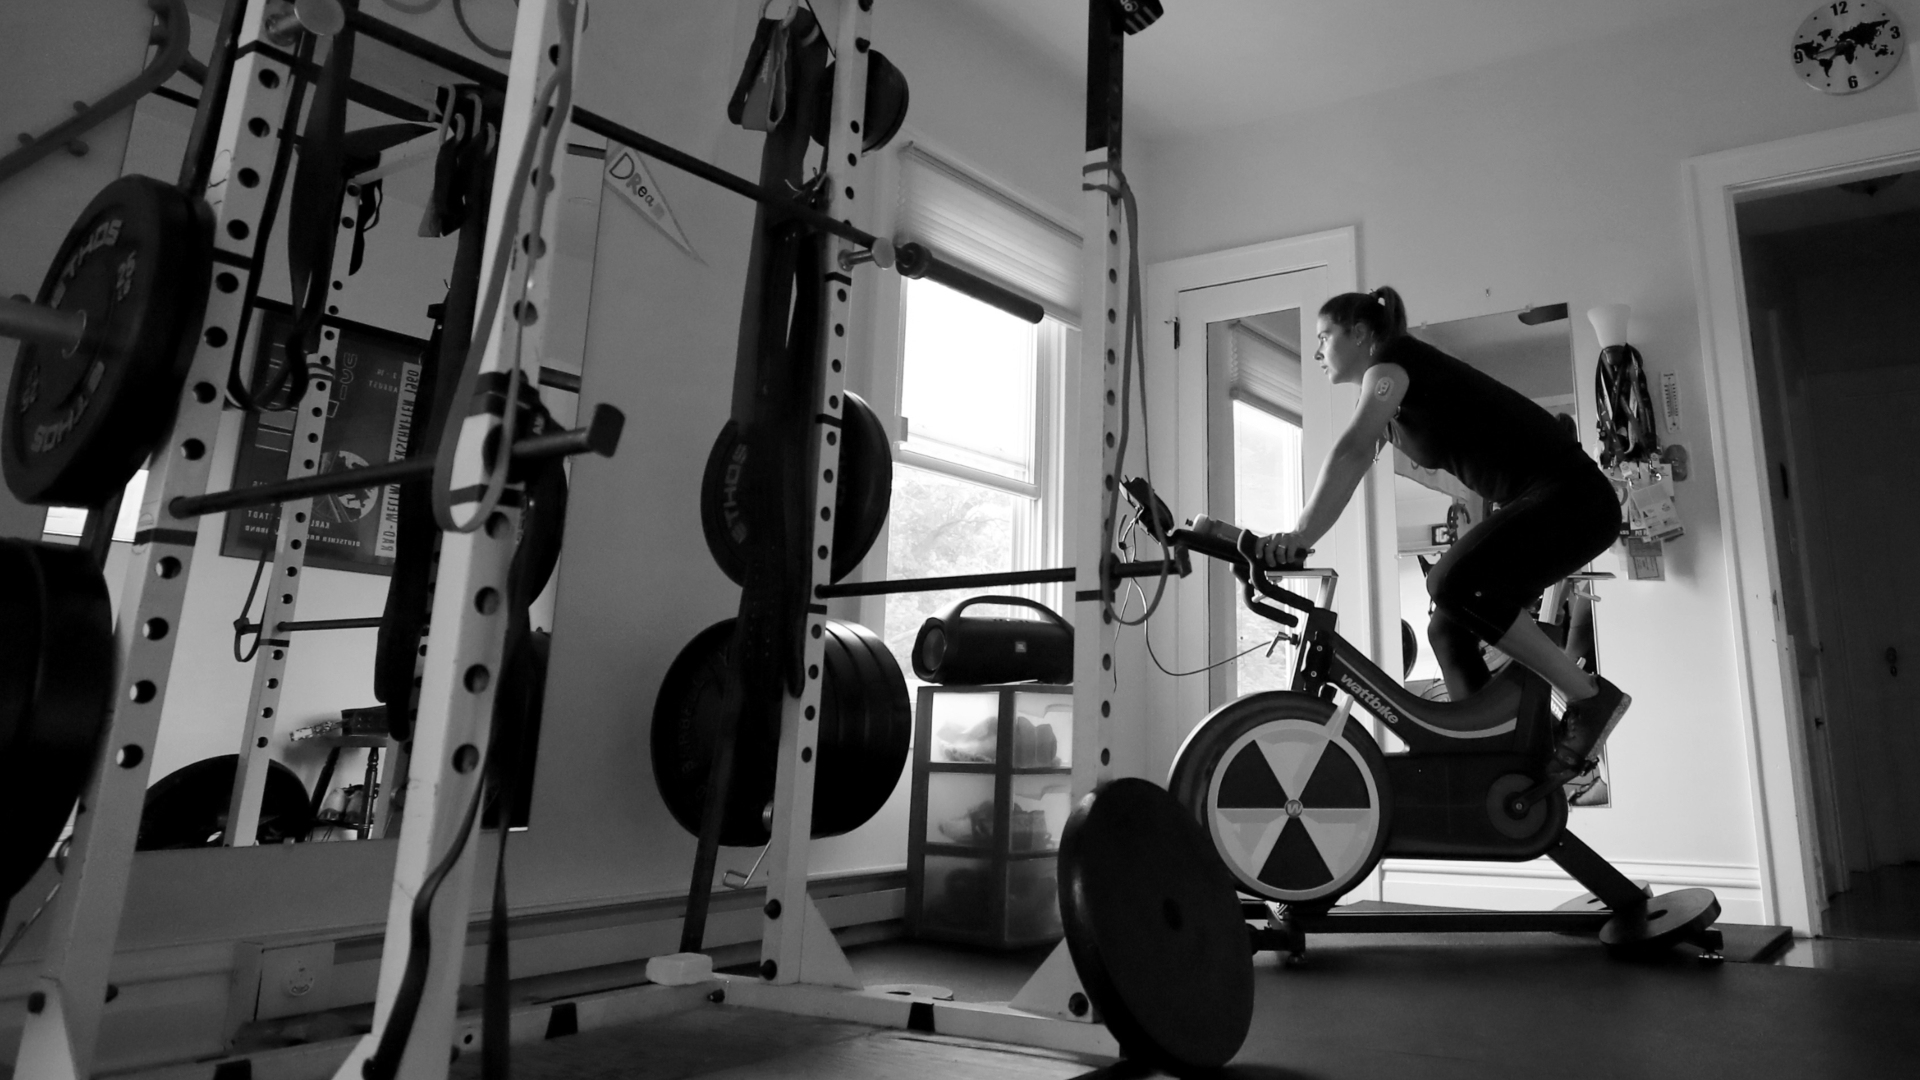 Pilates & Lifting Weights - Benefits of Cross Training